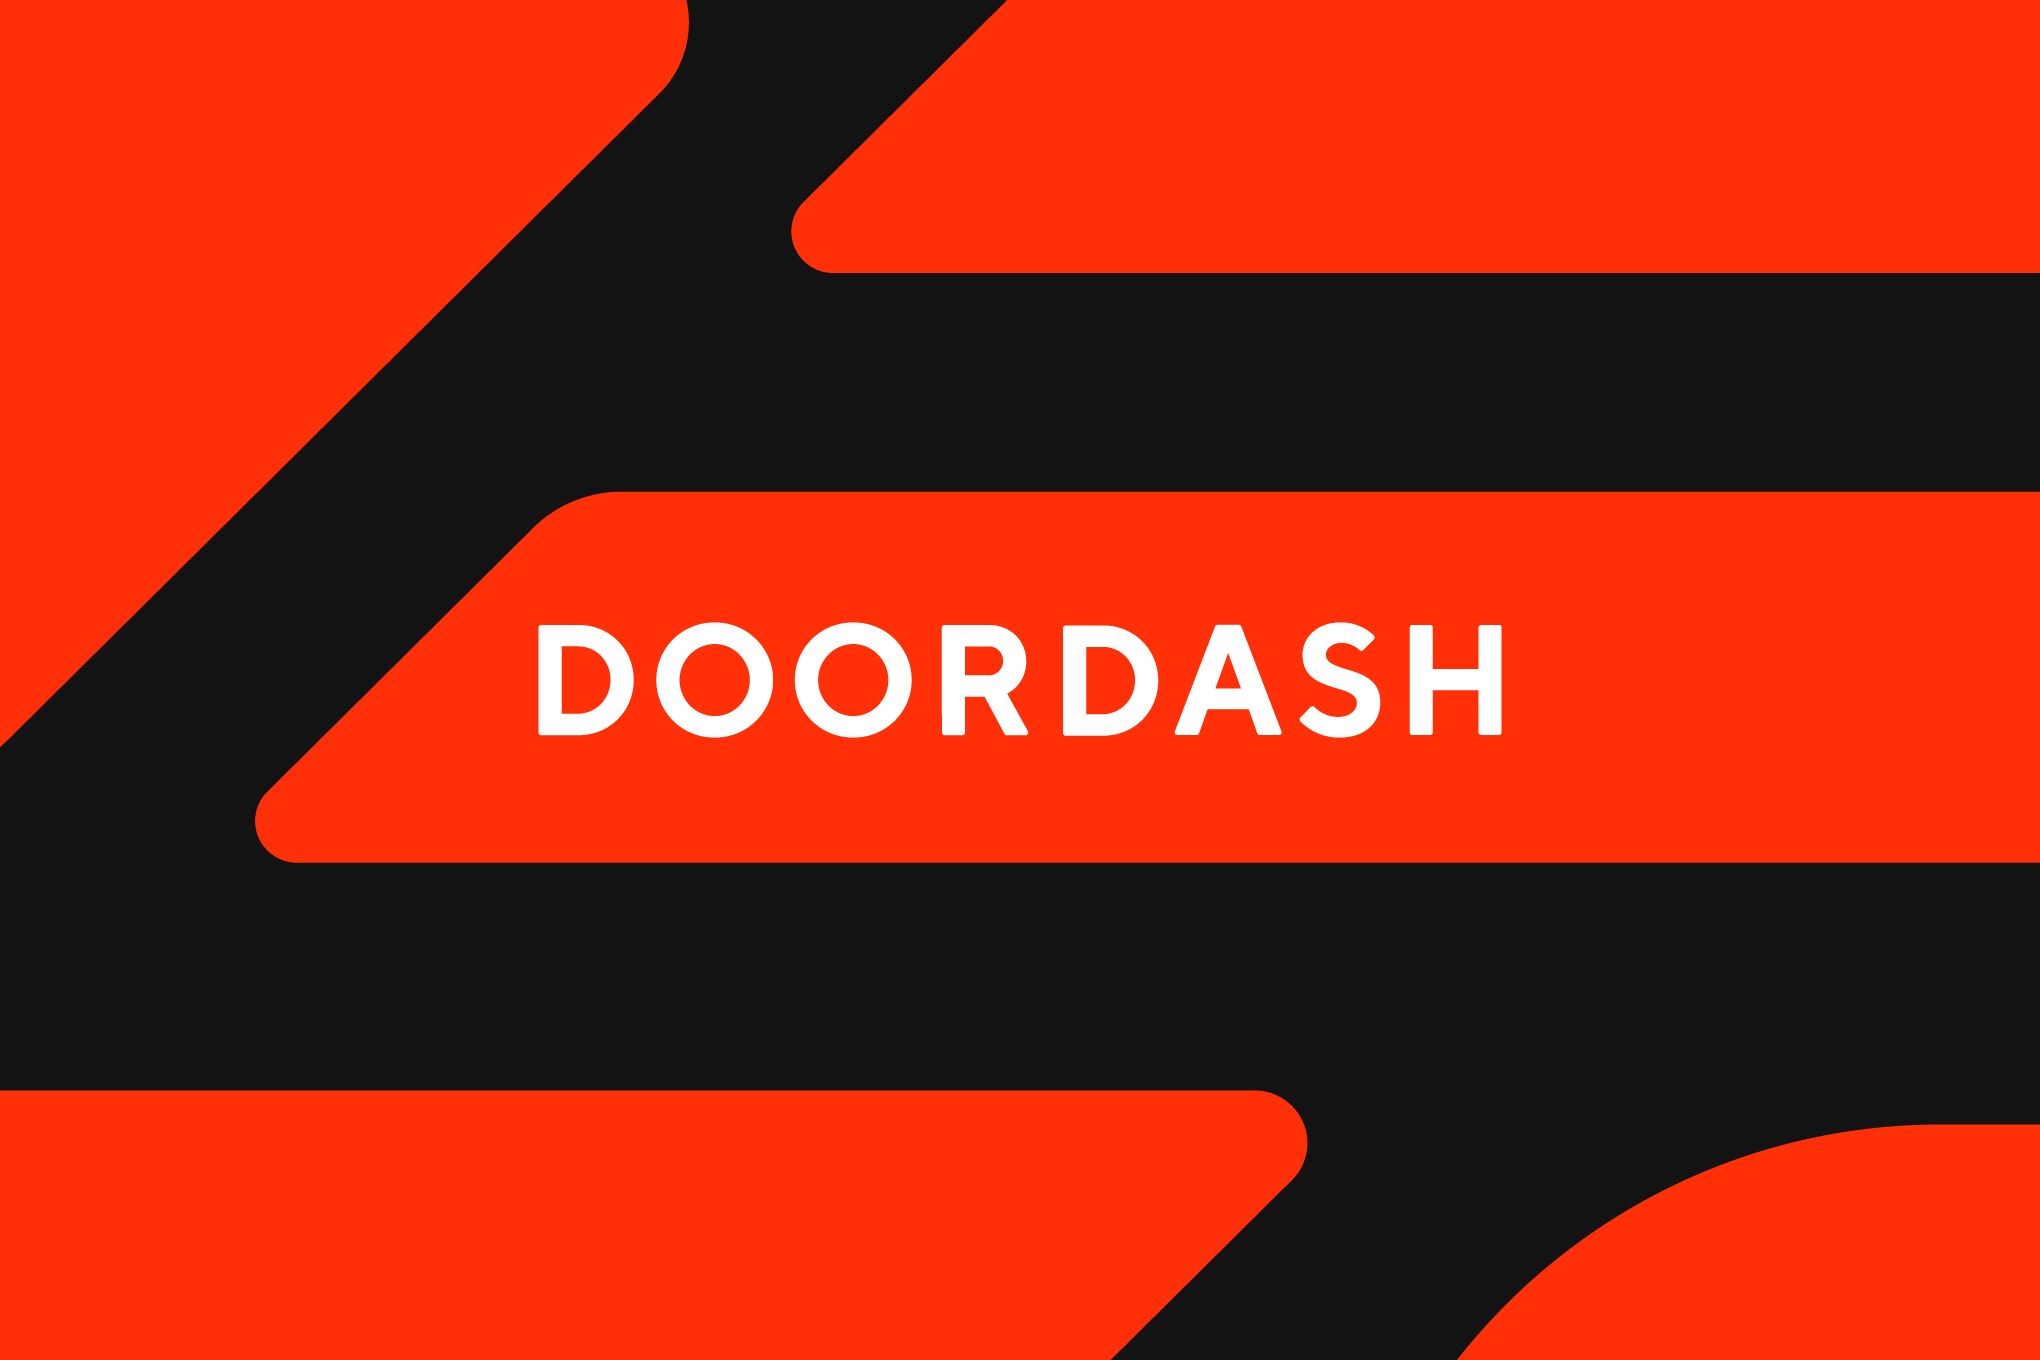 An illustration featuring the doordash logo